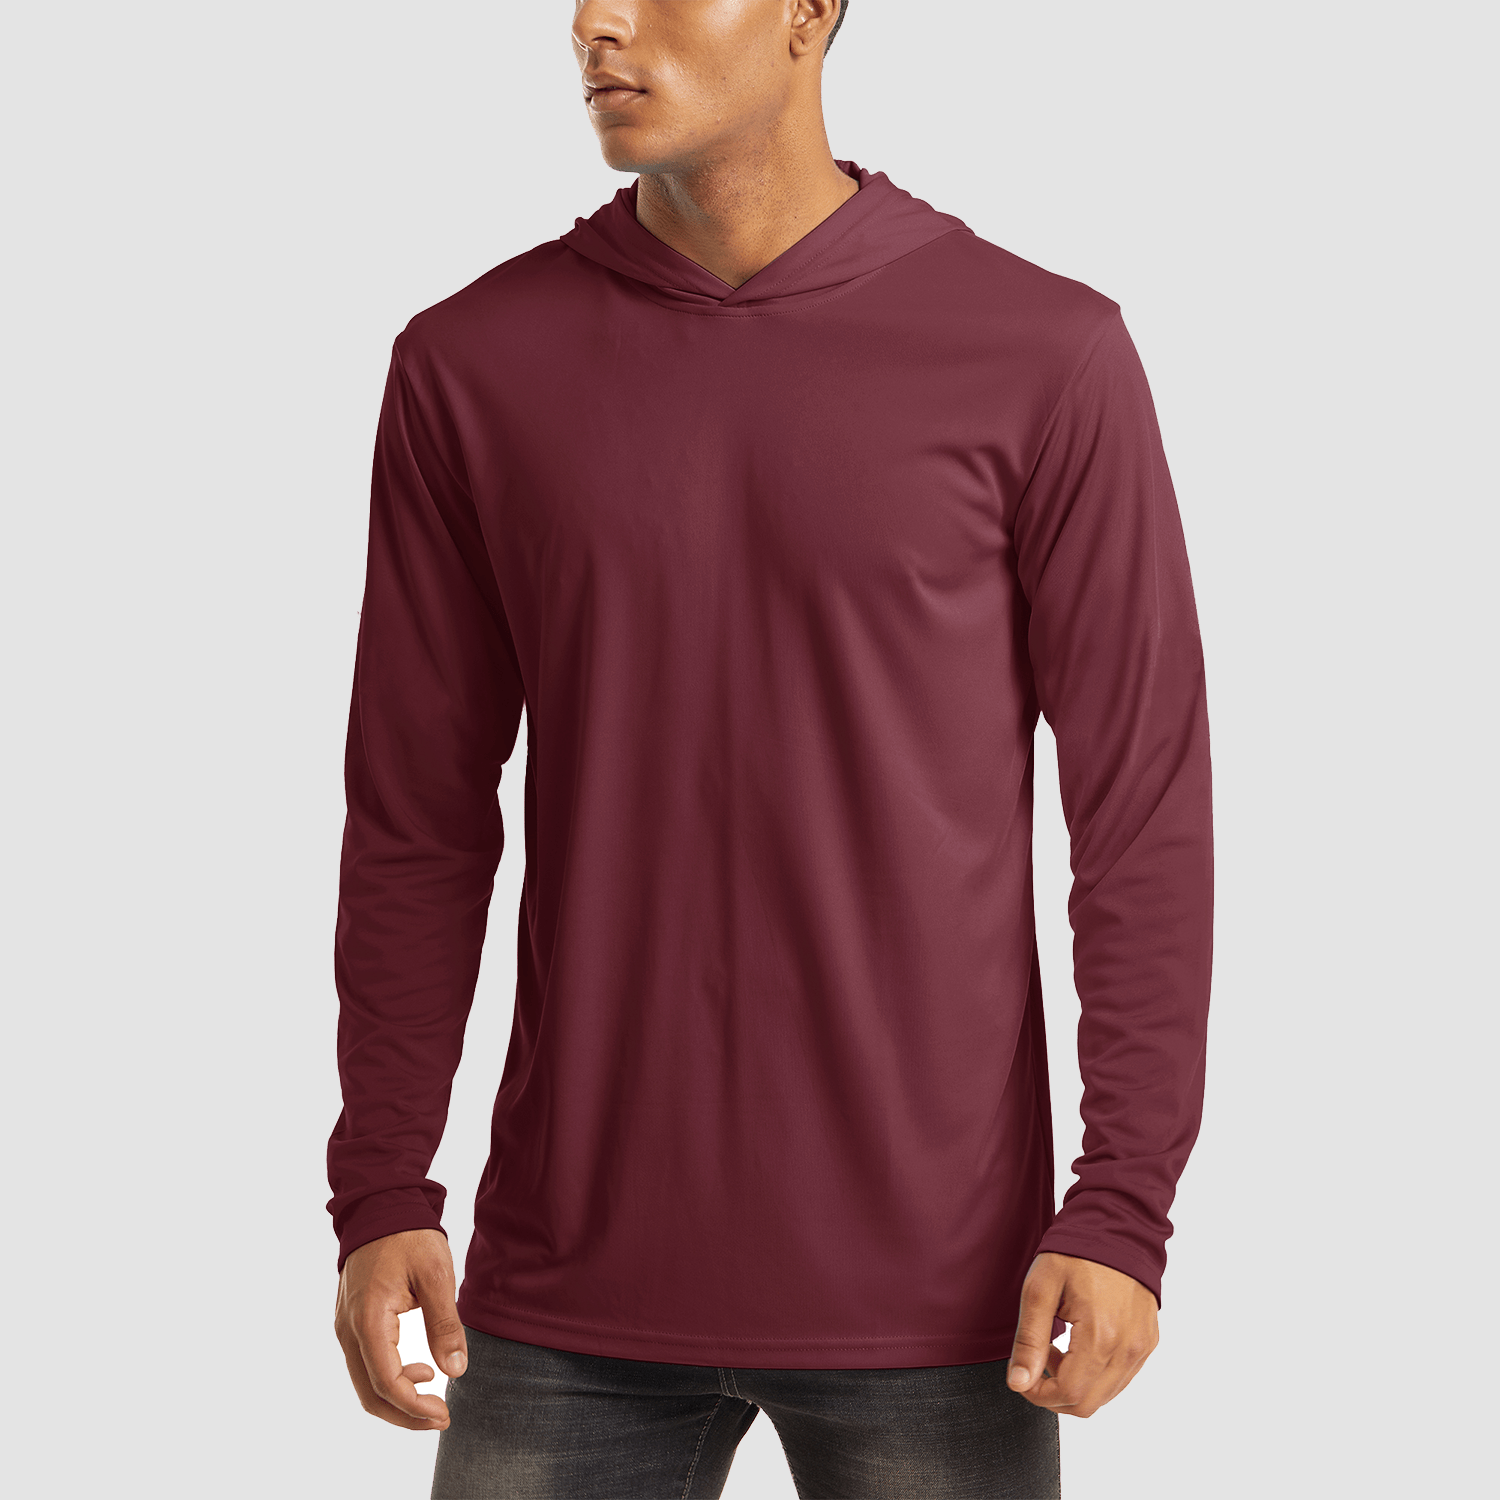 【Buy 4 Get 4th Free】Men's Long Sleeve Hooded Shirt UPF 50+ Athletic Shirts, Wine / XL